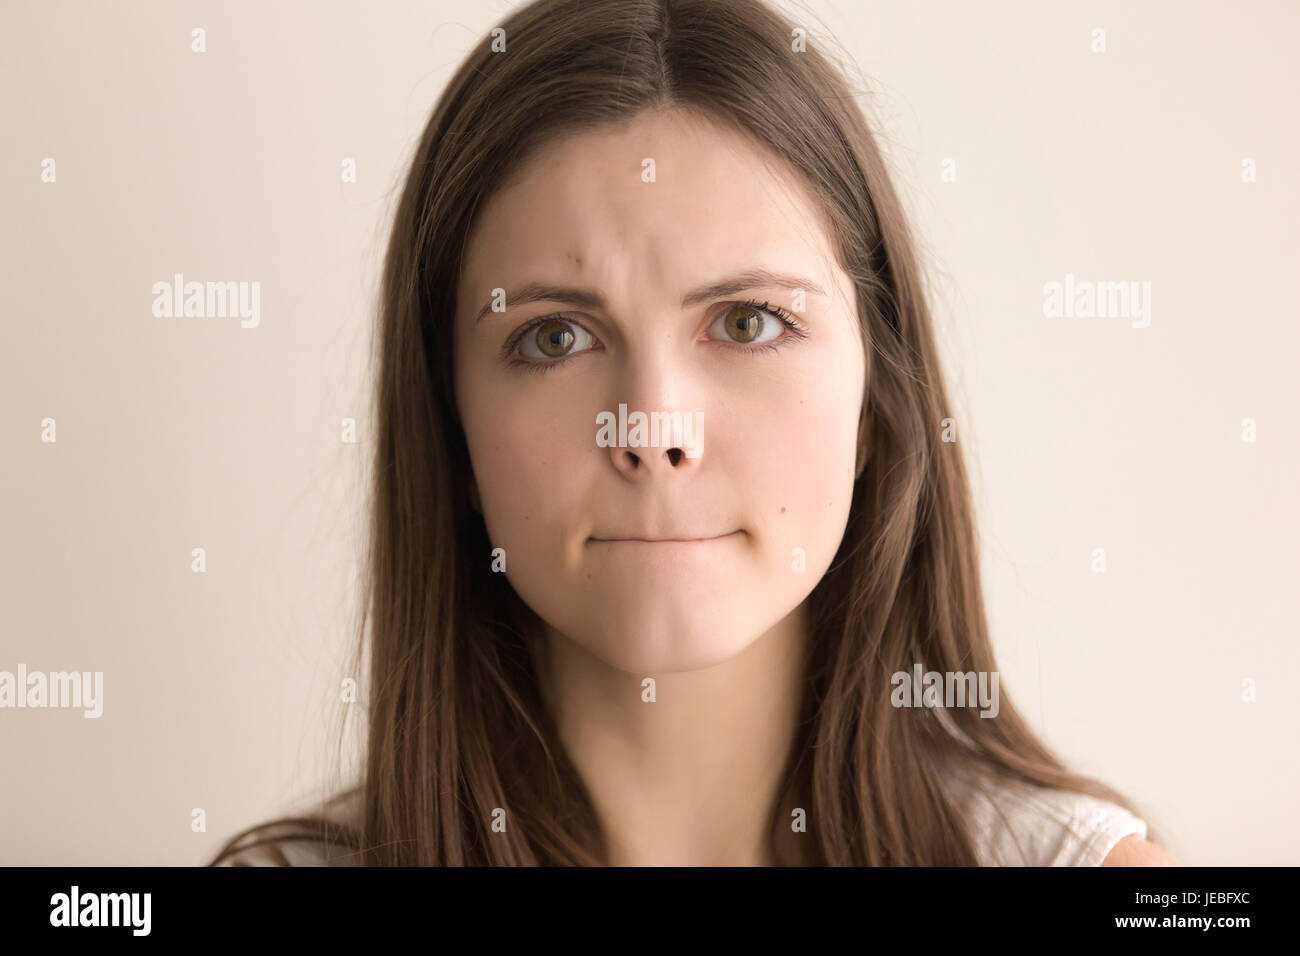 Emotive headshot portrait of indecisive young woman Stock Photo